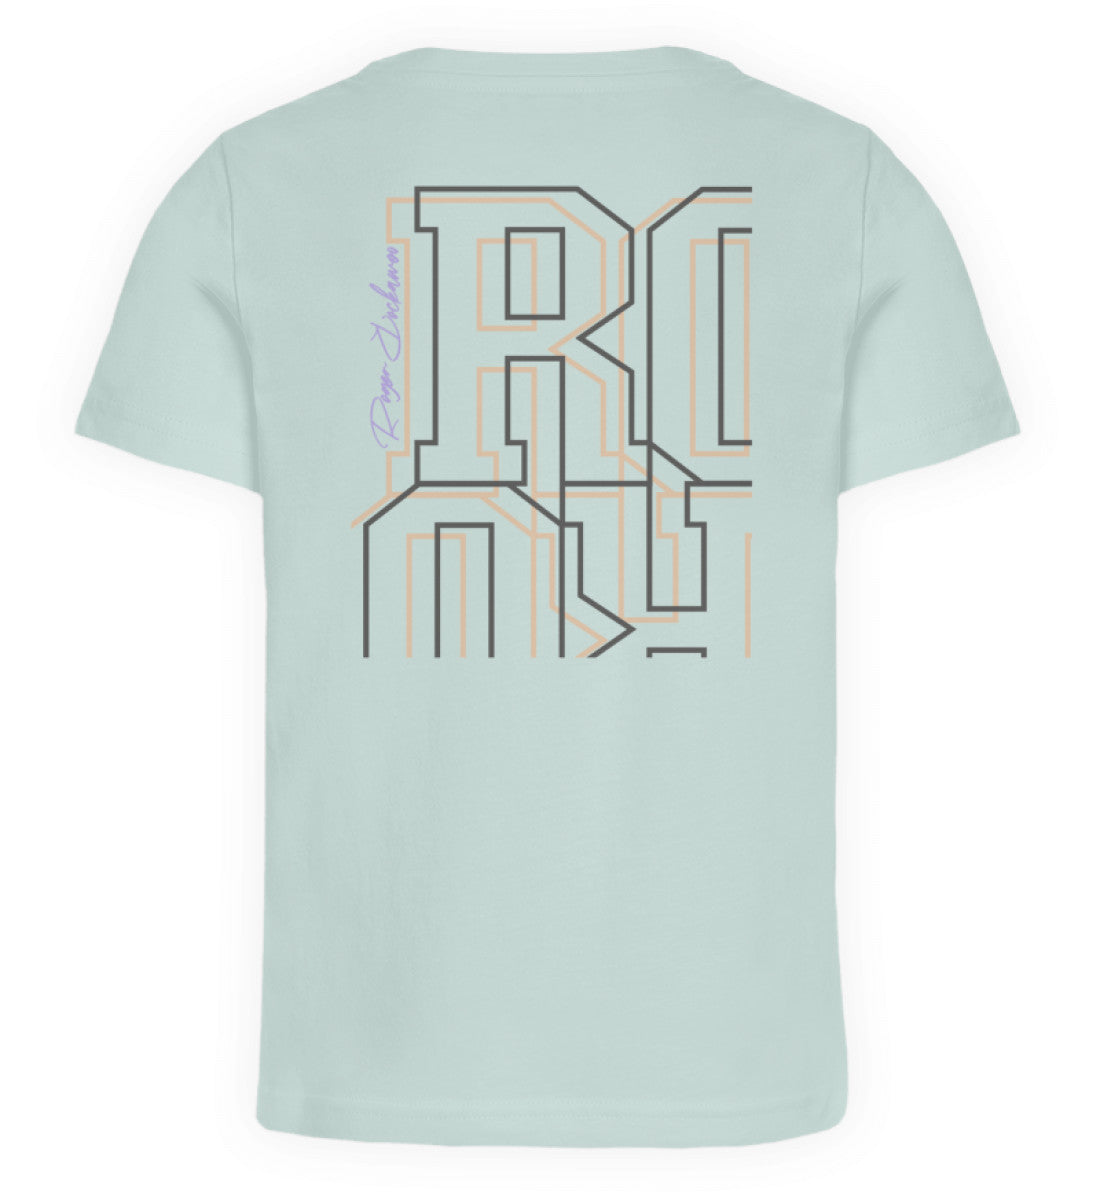 Carribean Blue farbiges Kinder T-Shirt für Mädchen und Jungen bedruckt mit dem Design der Roger Rockawoo Kollektion and then BMX came along